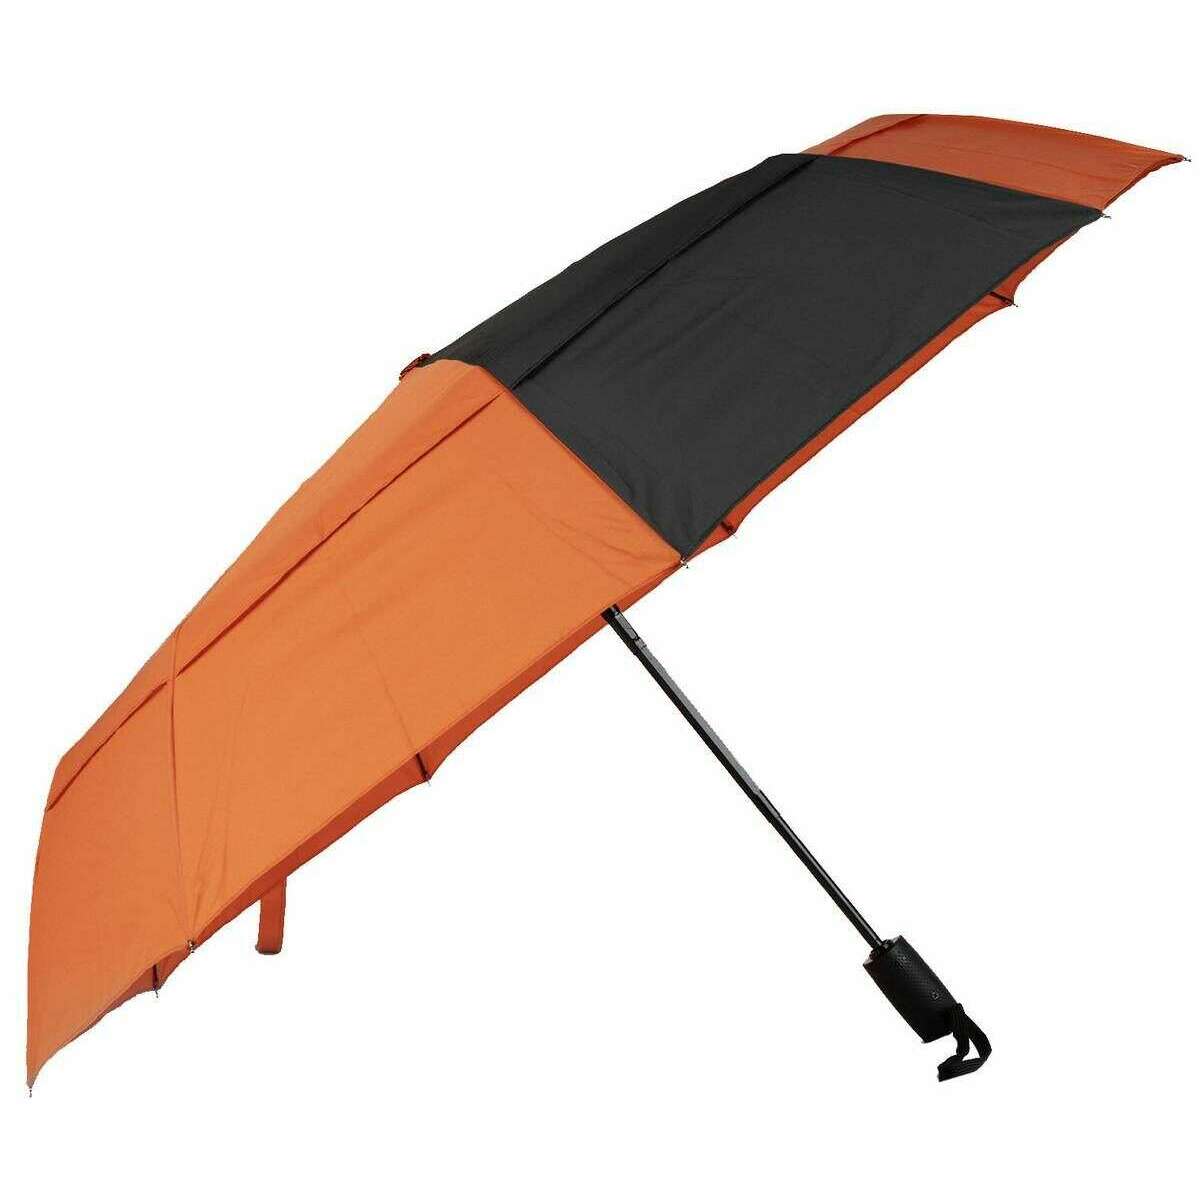 Roka Waterloo Recycled Nylon Umbrella - Burnt Orange/Black